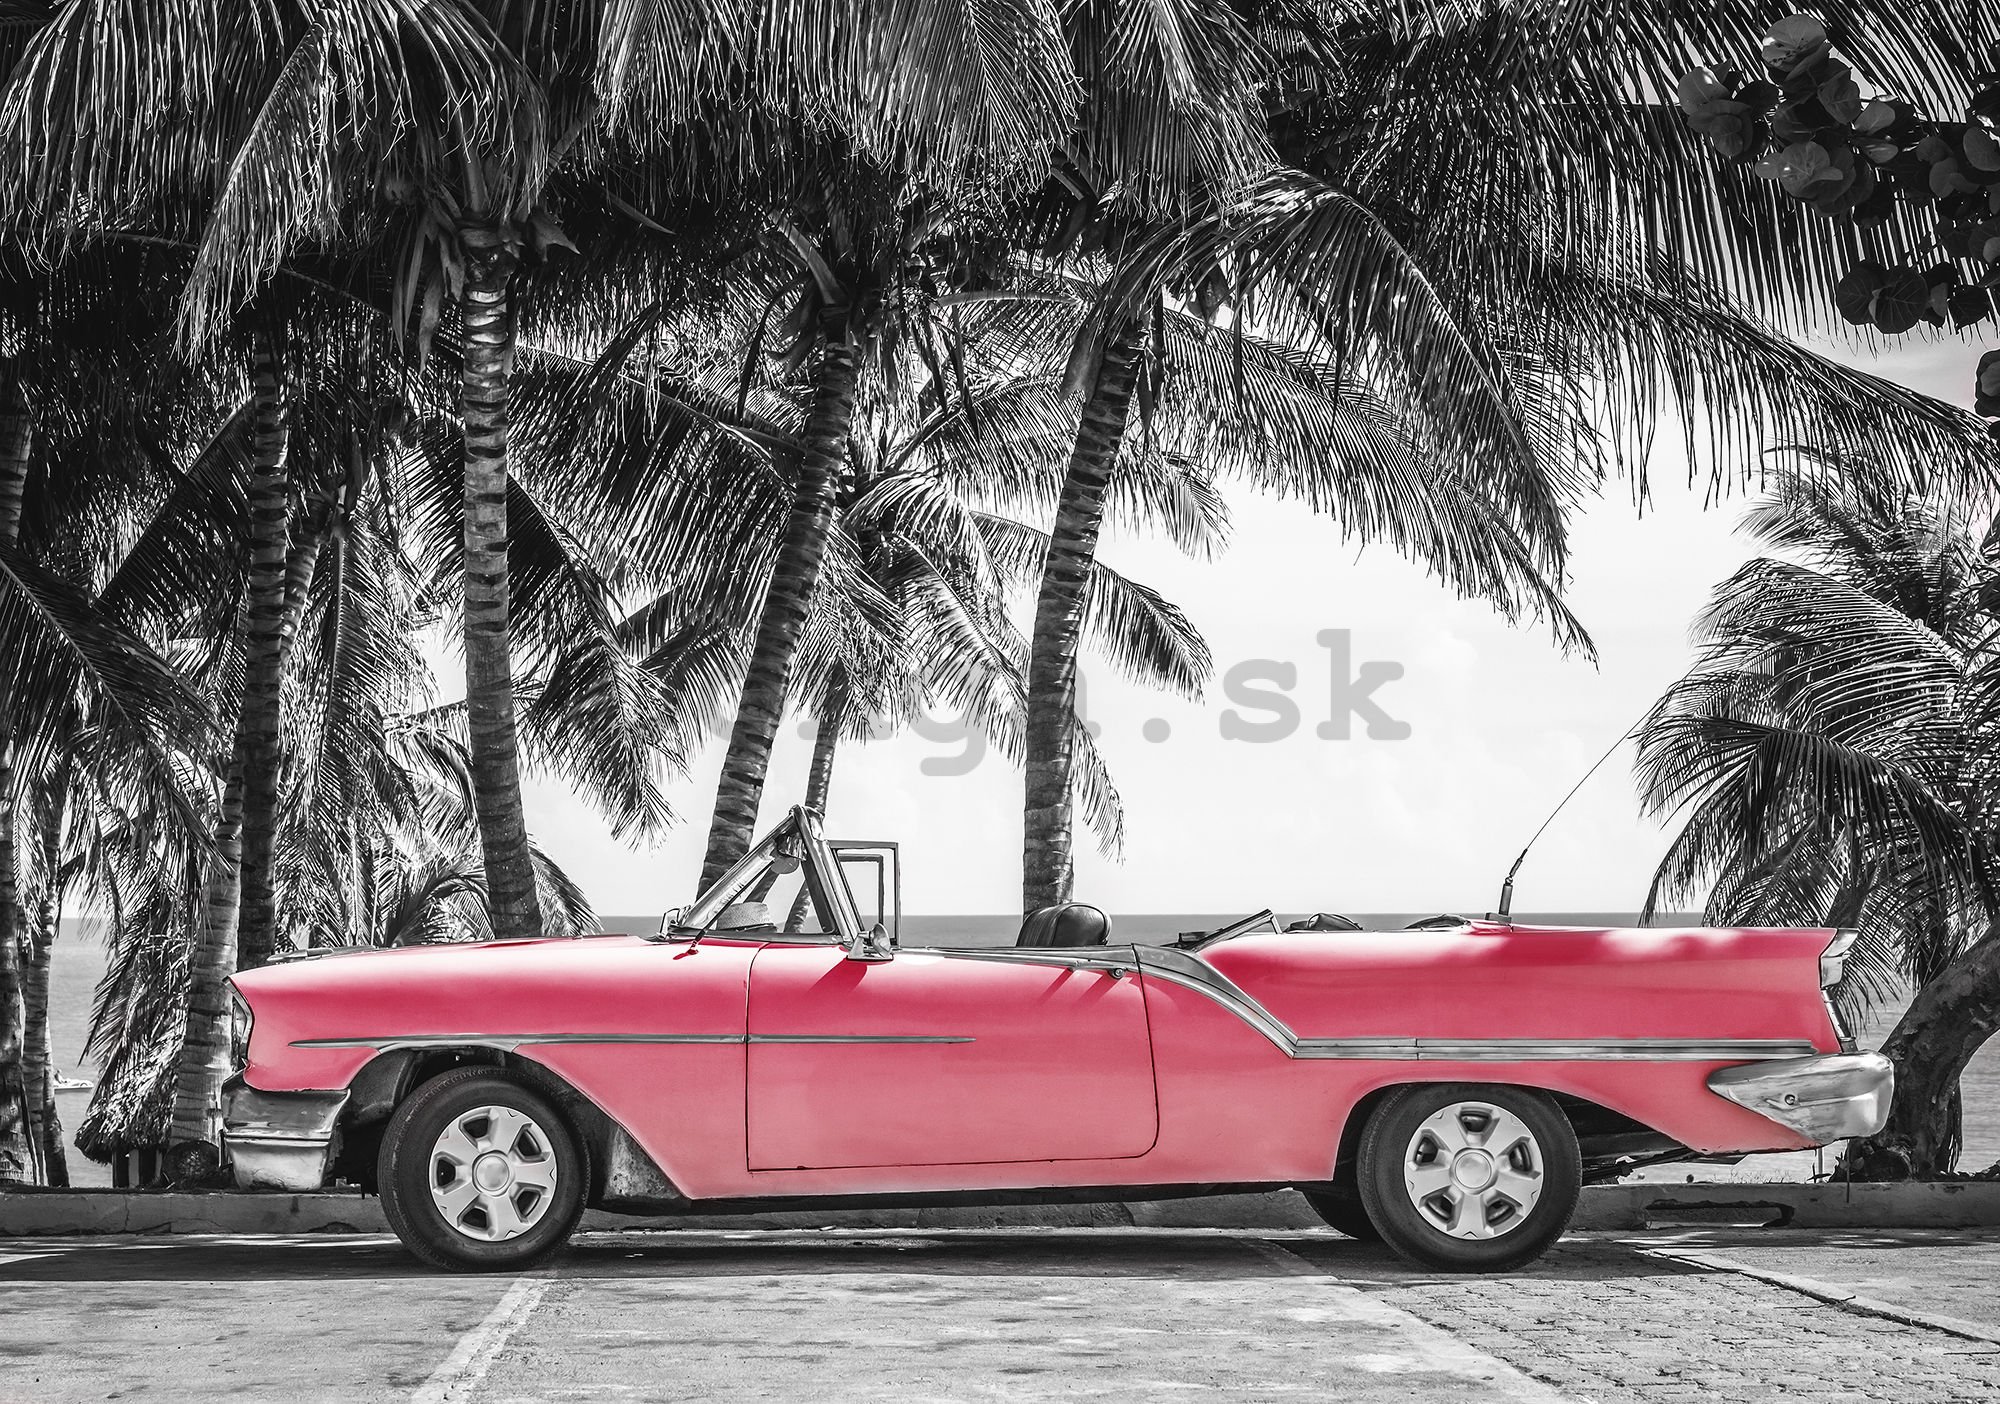 Fototapeta: Kuba červené auto - 104x152,5 cm